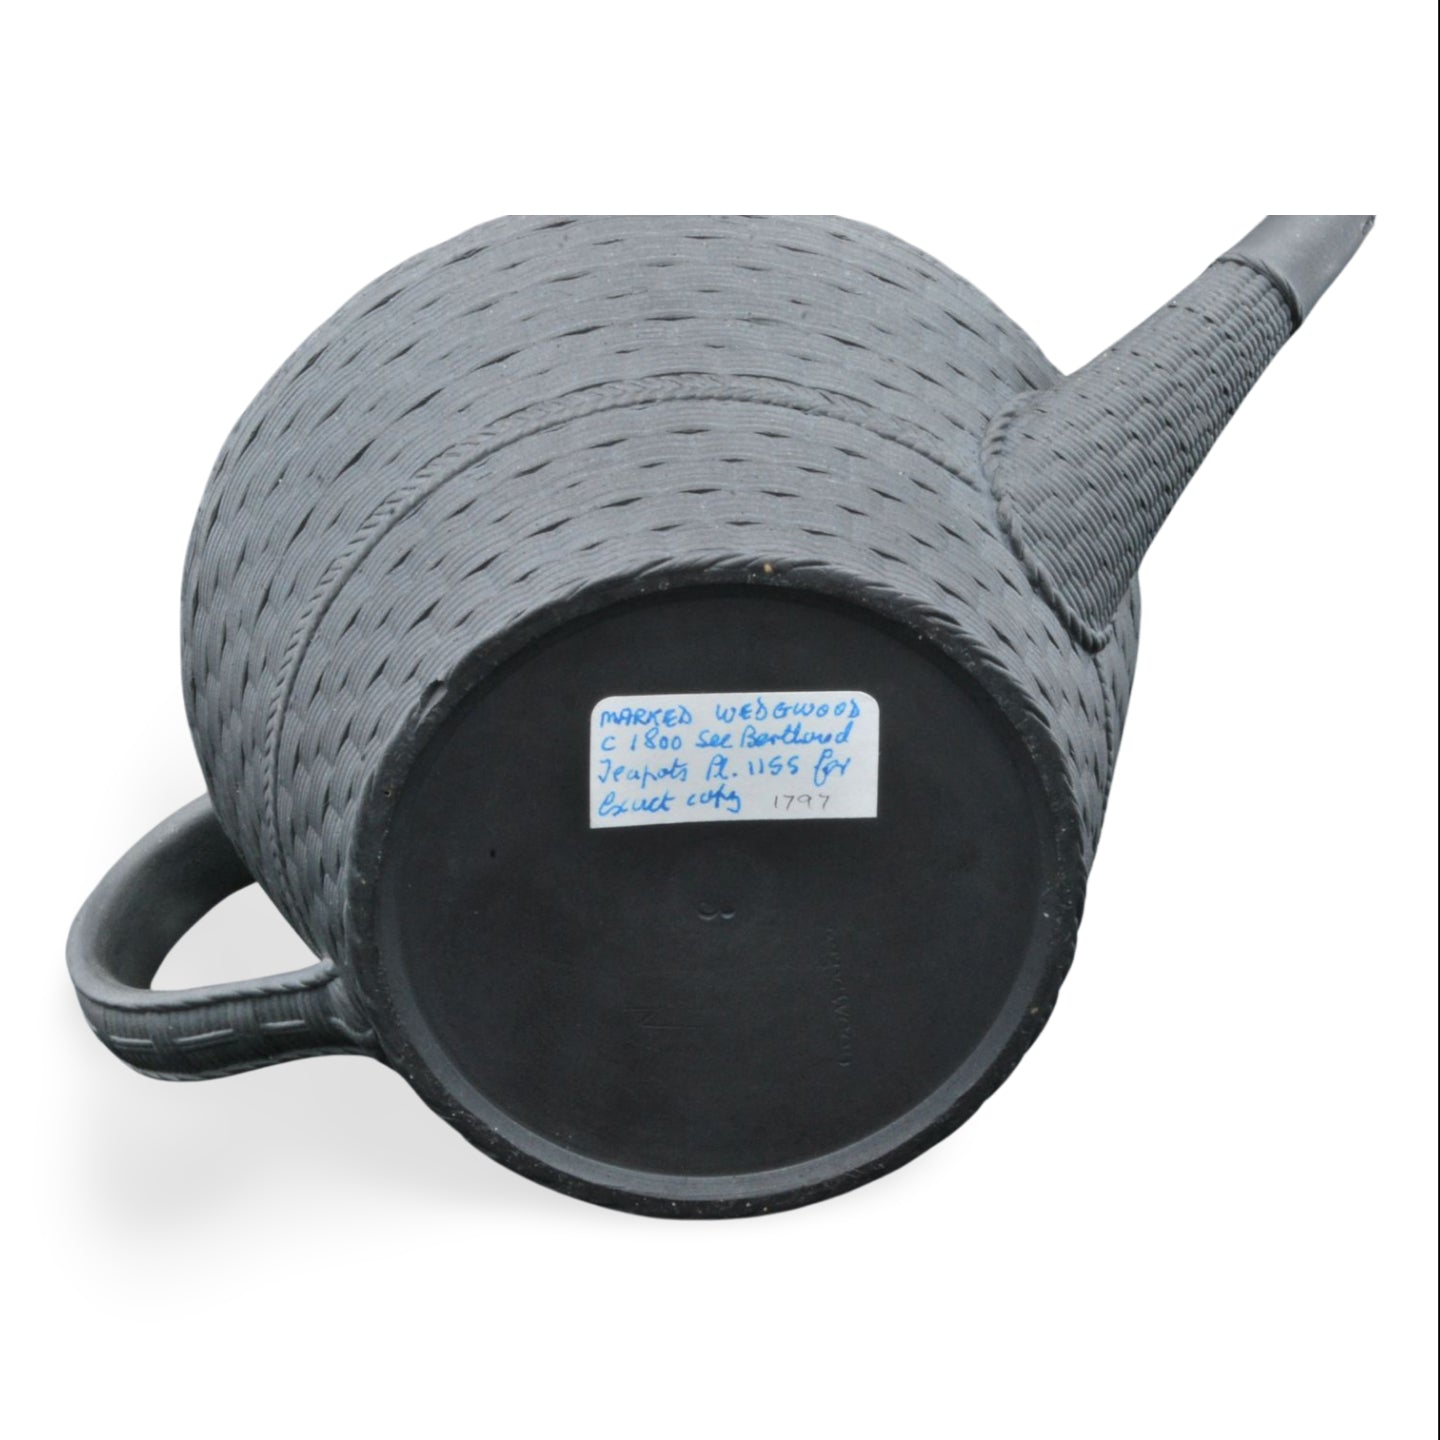 Teapot: basket weave